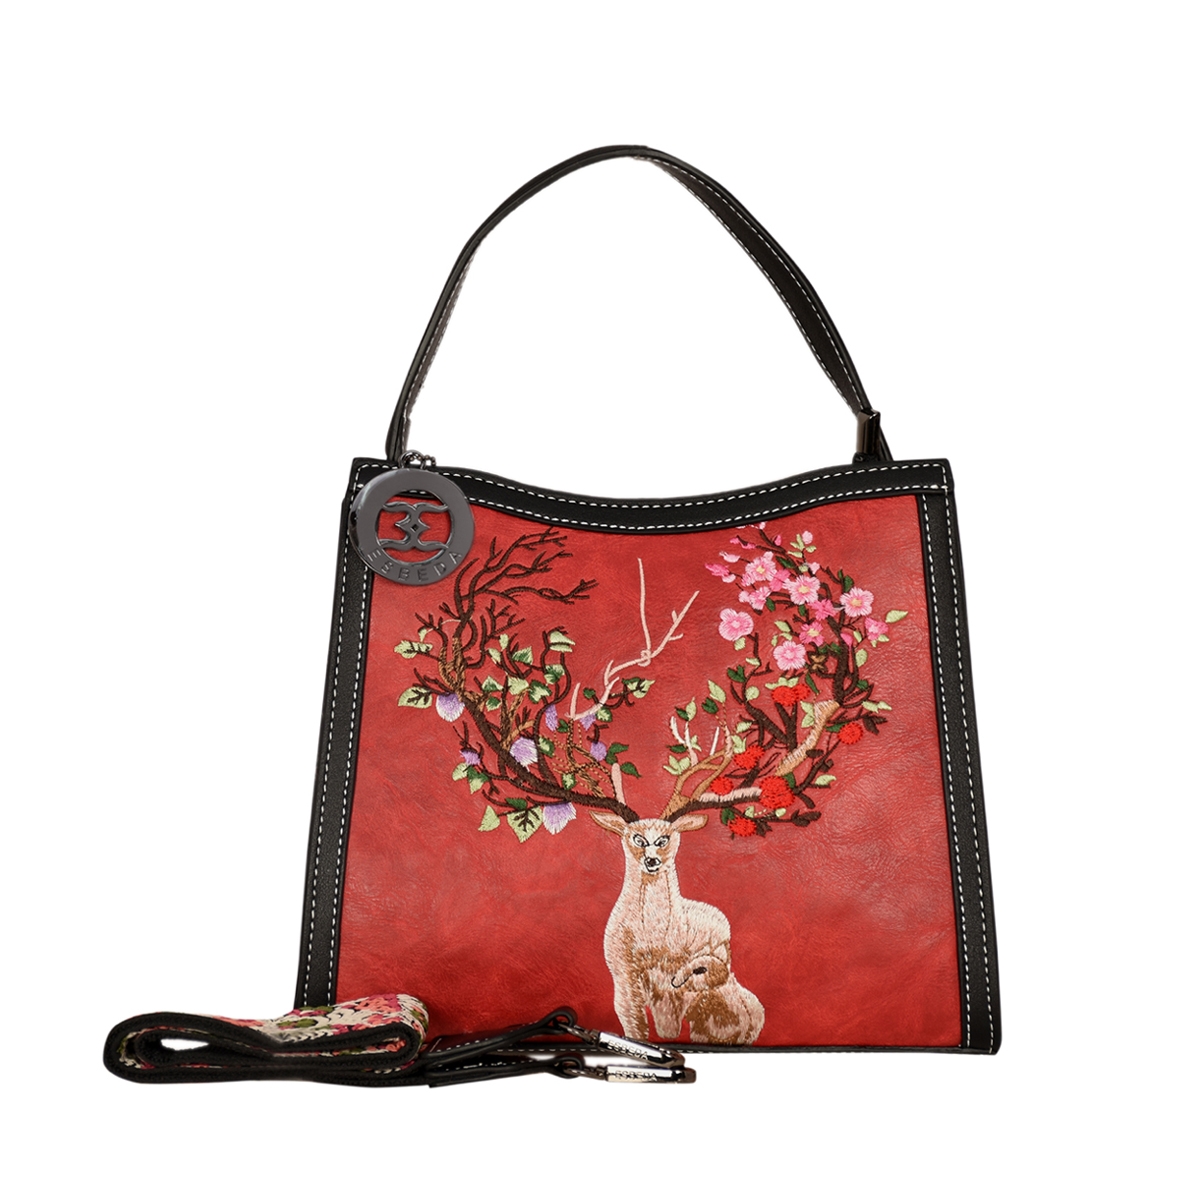 ESBEDA | ESBEDA Red Color Embroidery Dear Handbag For Womens